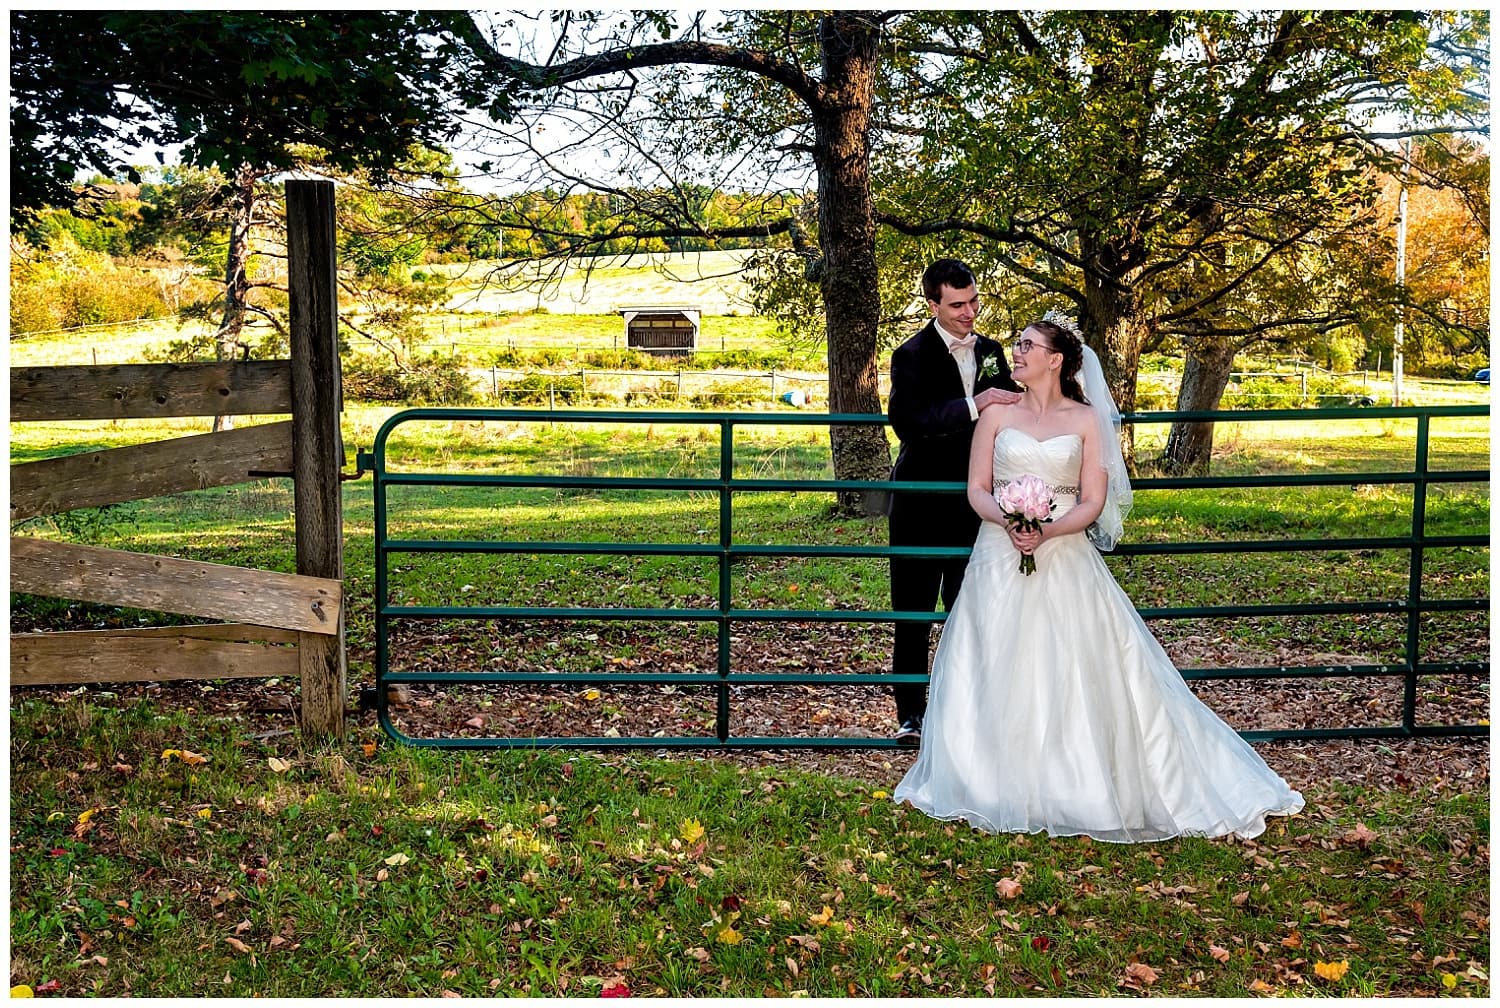 A Rustic Kinley Farm Barn Wedding with Beth and James